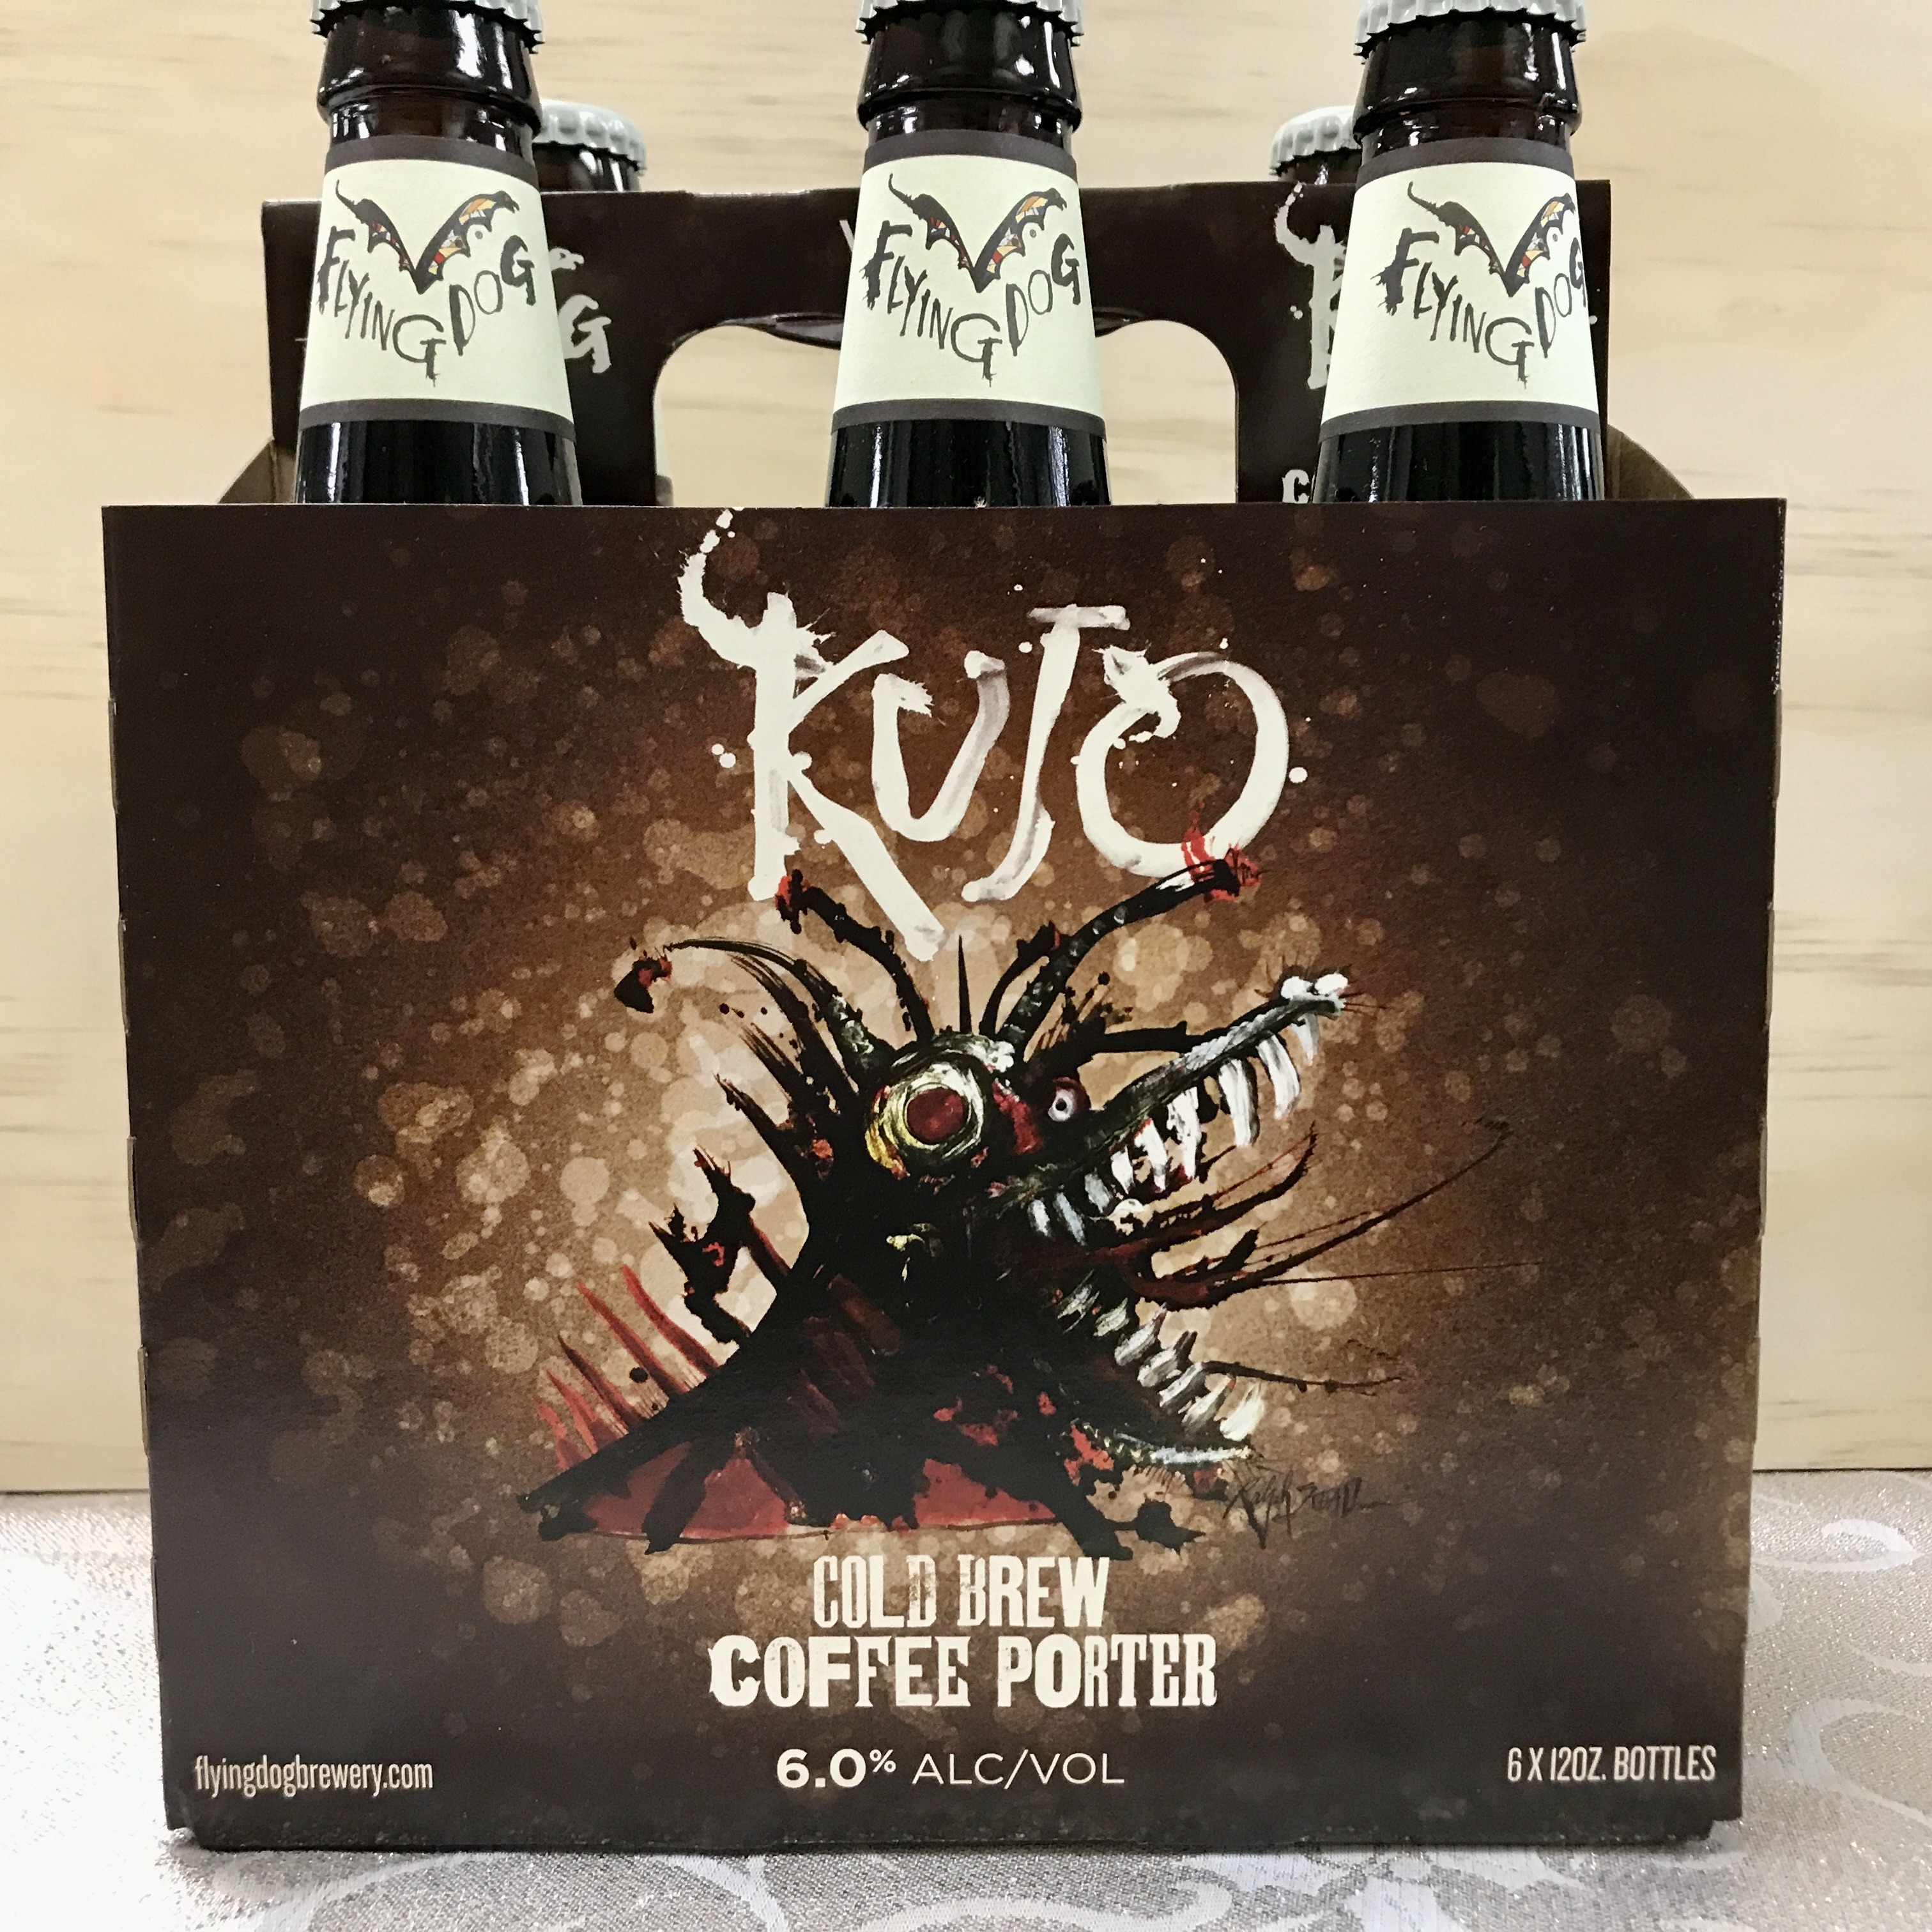 Flying Dog Kujo Cold Brew Coffee Porter 6 x 12oz bottles